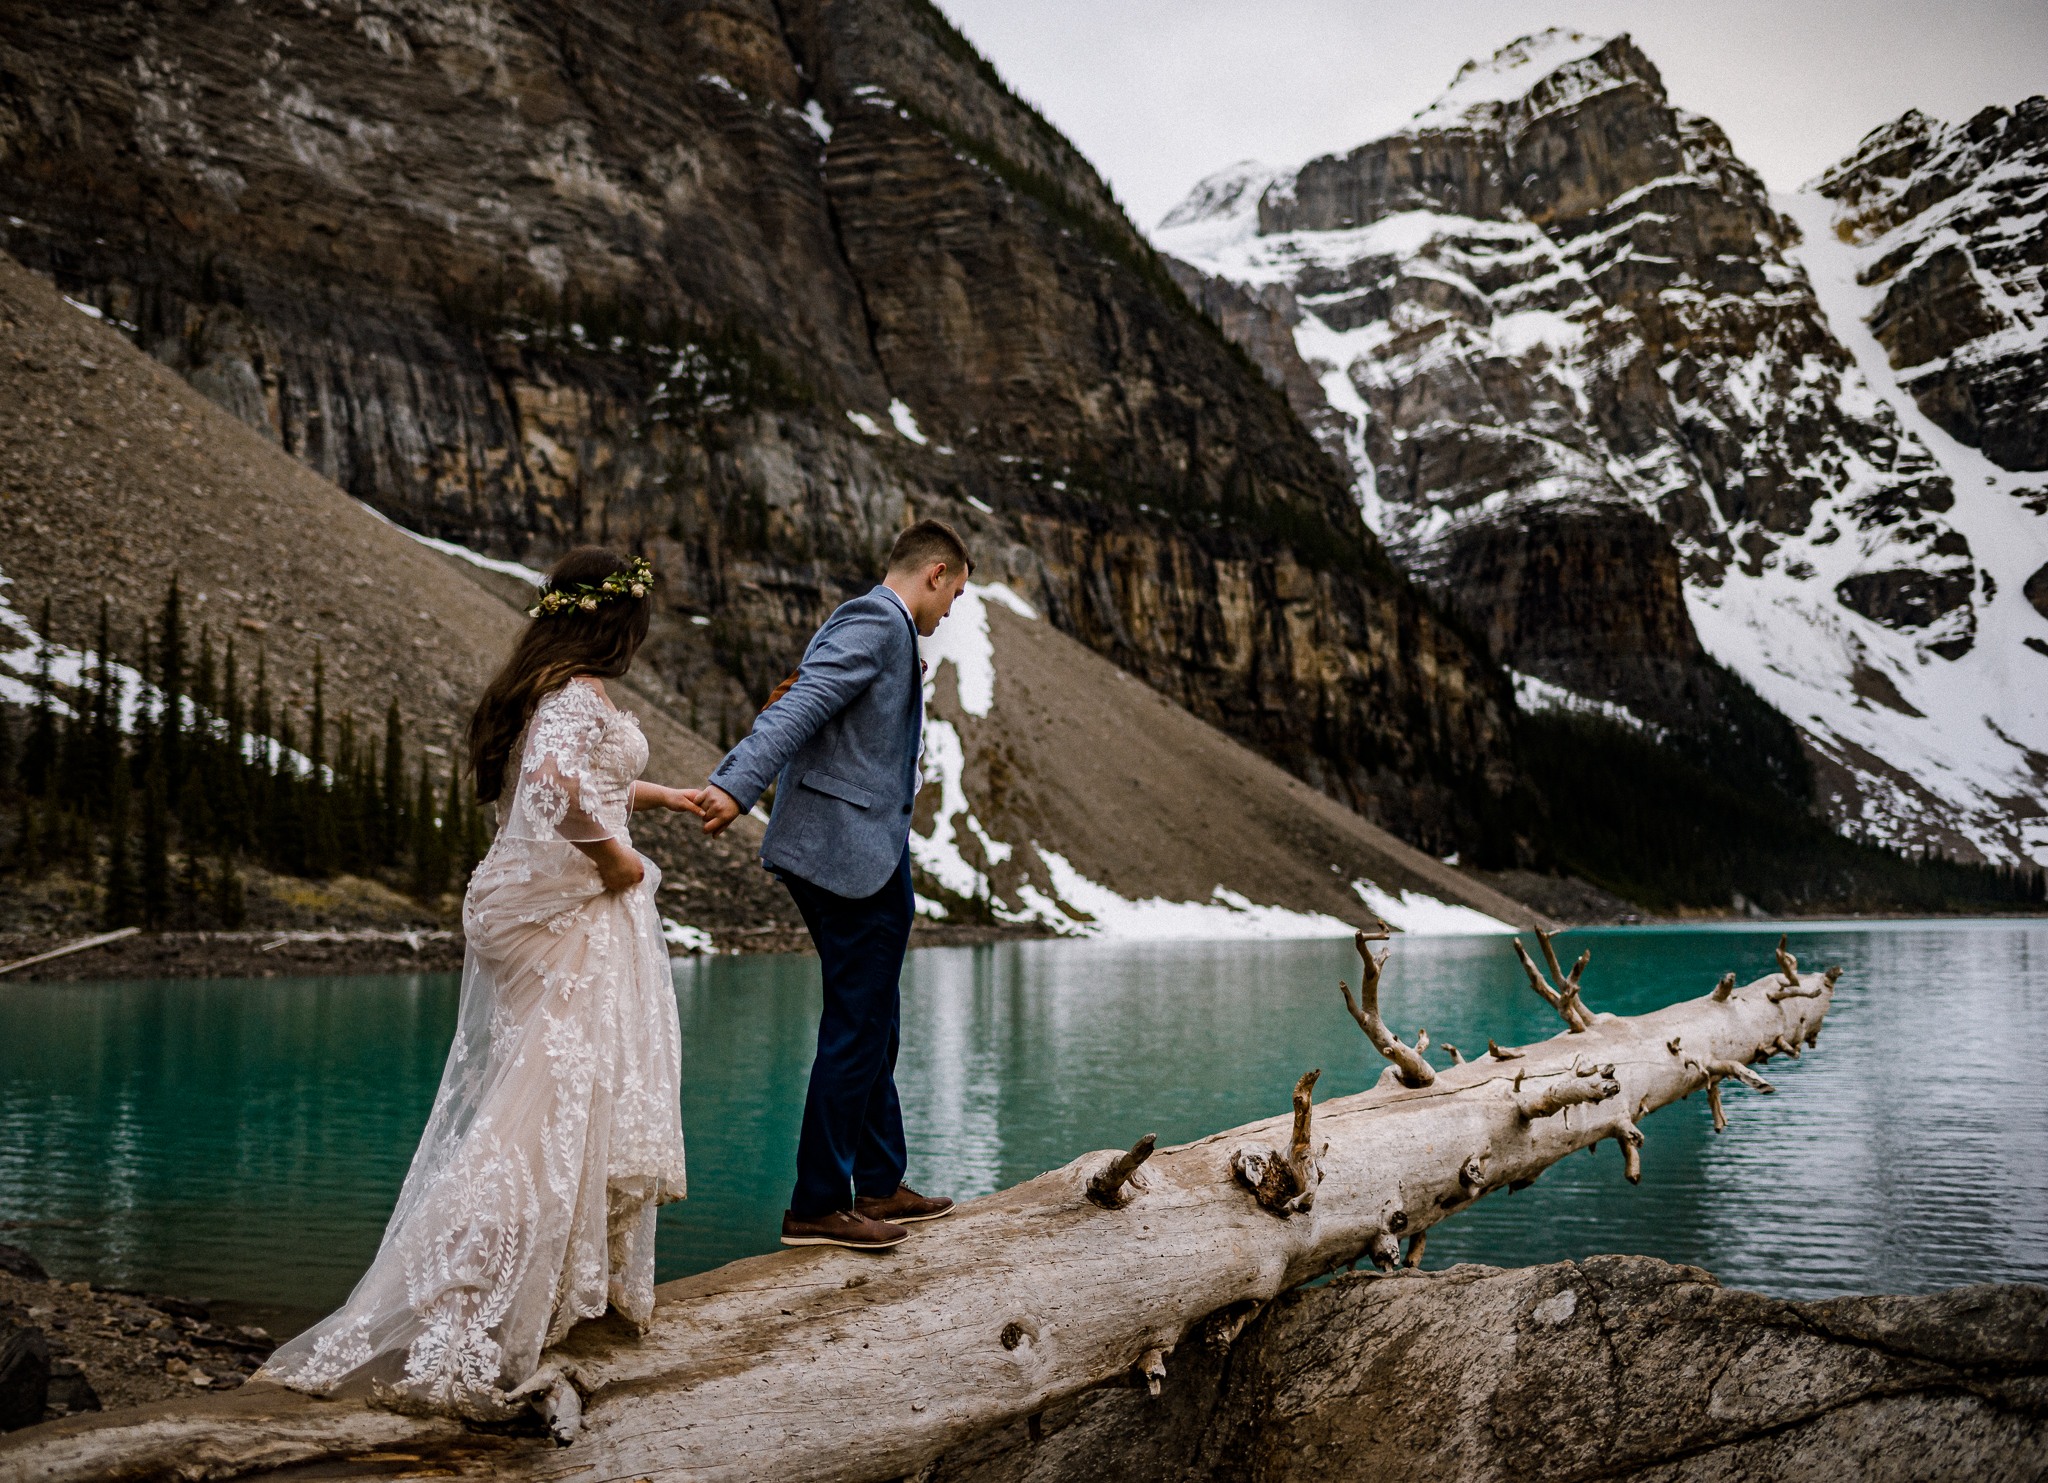 Groom holding brides hand walking up a log at Moraine Lake, Alberta